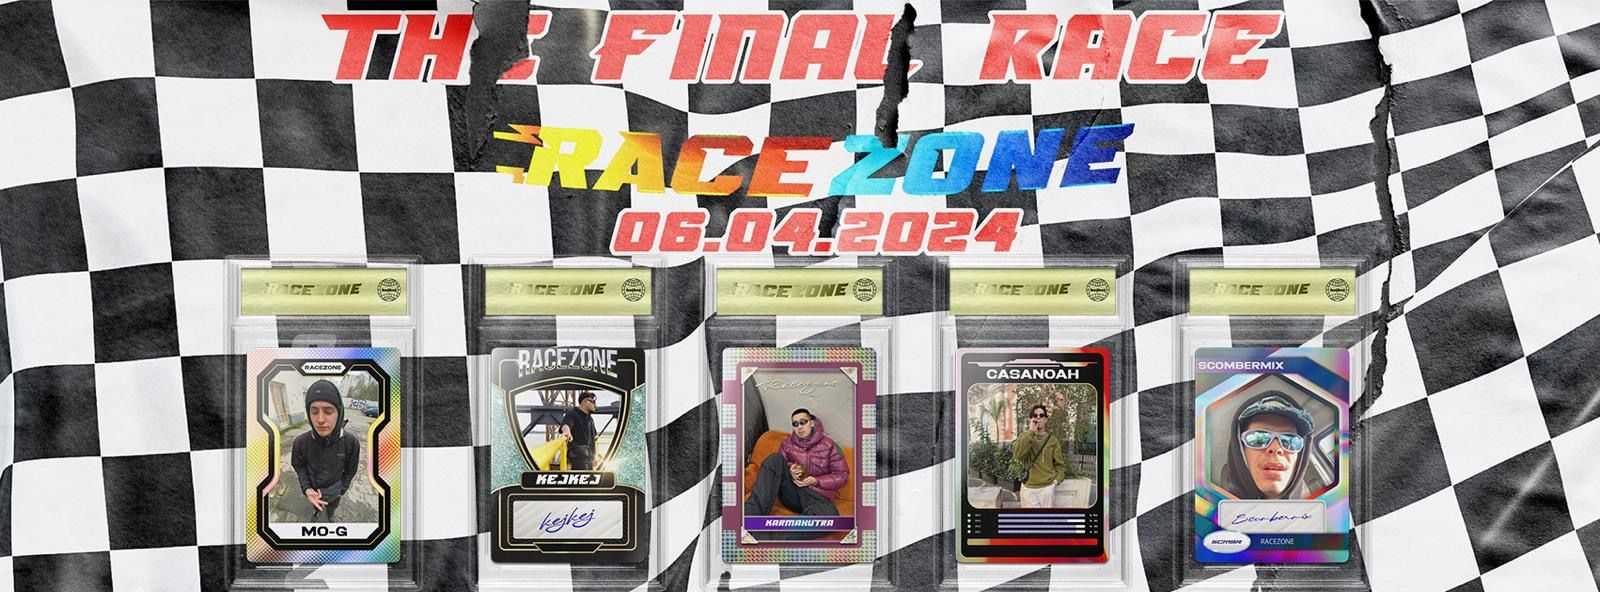 Final Race Zone - Championship 